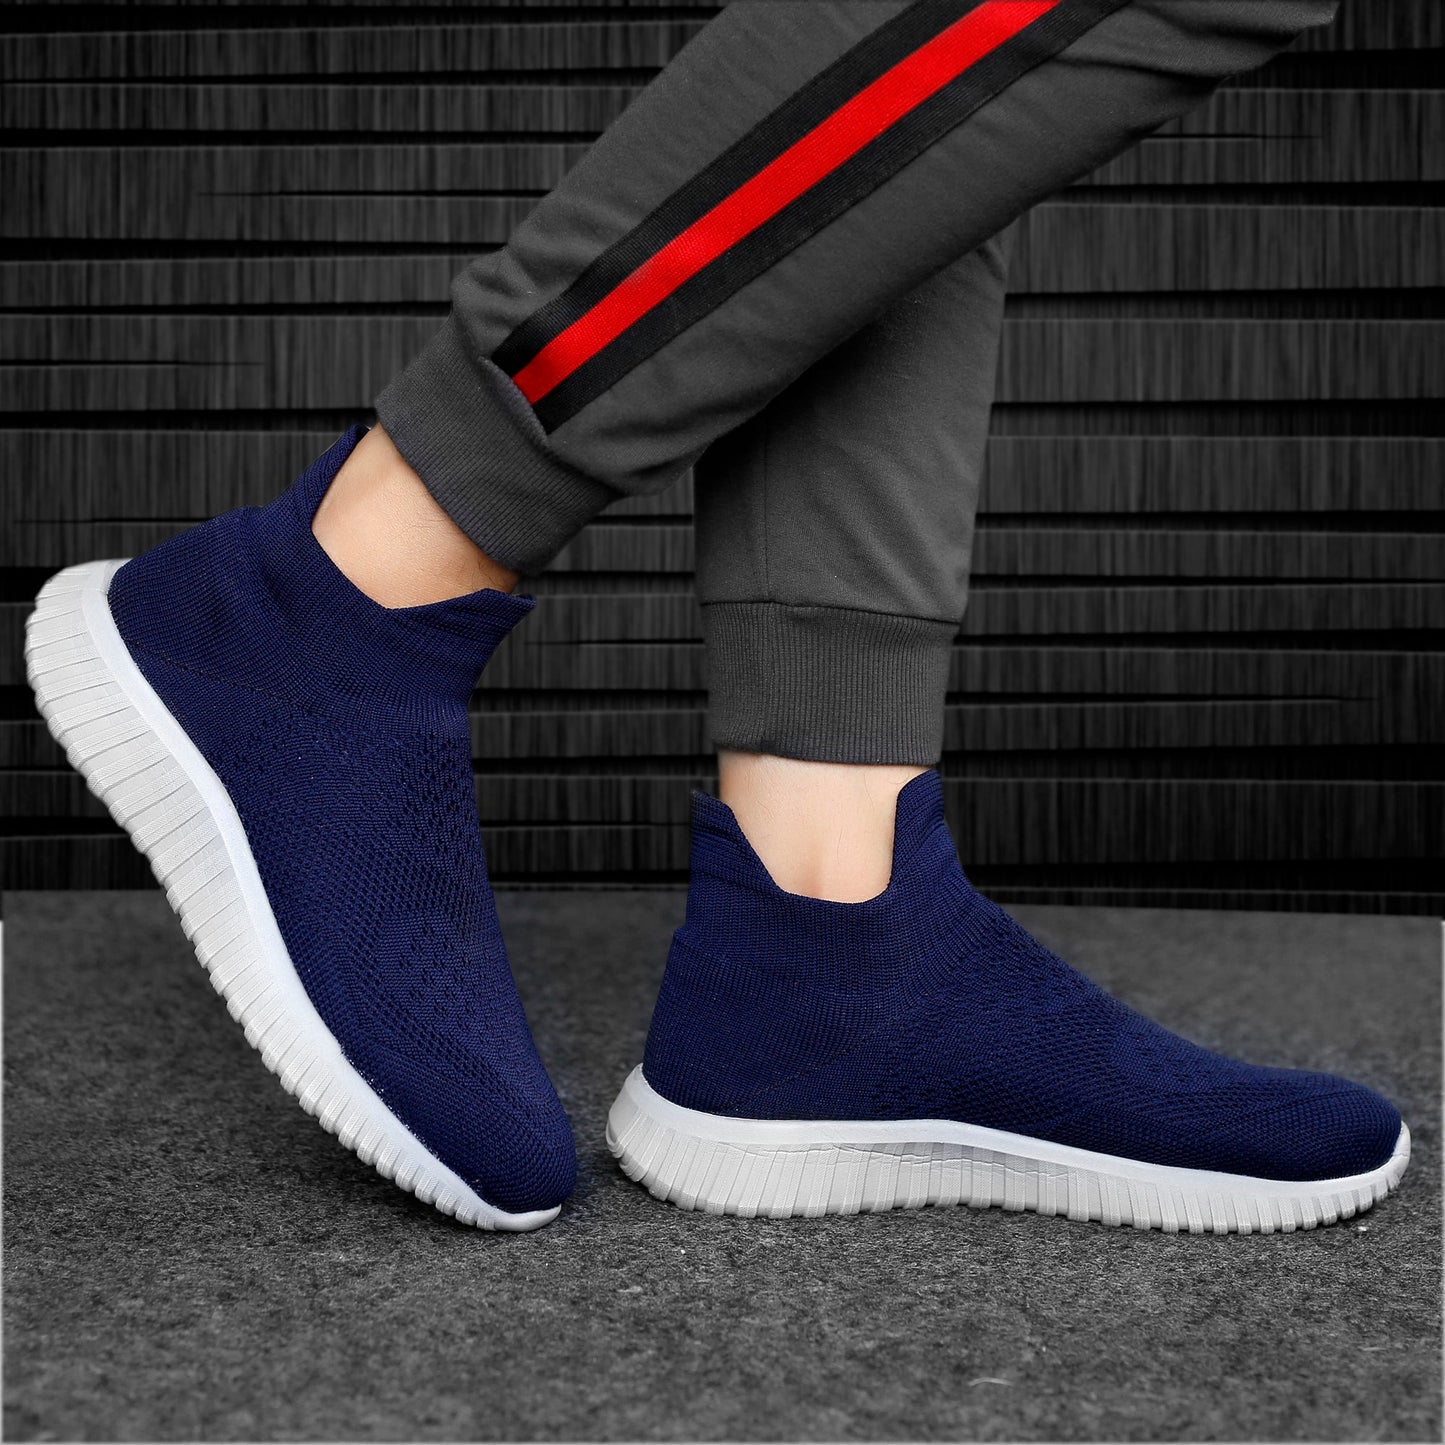 Men's Latest Fashionable Casual Socks Shoes